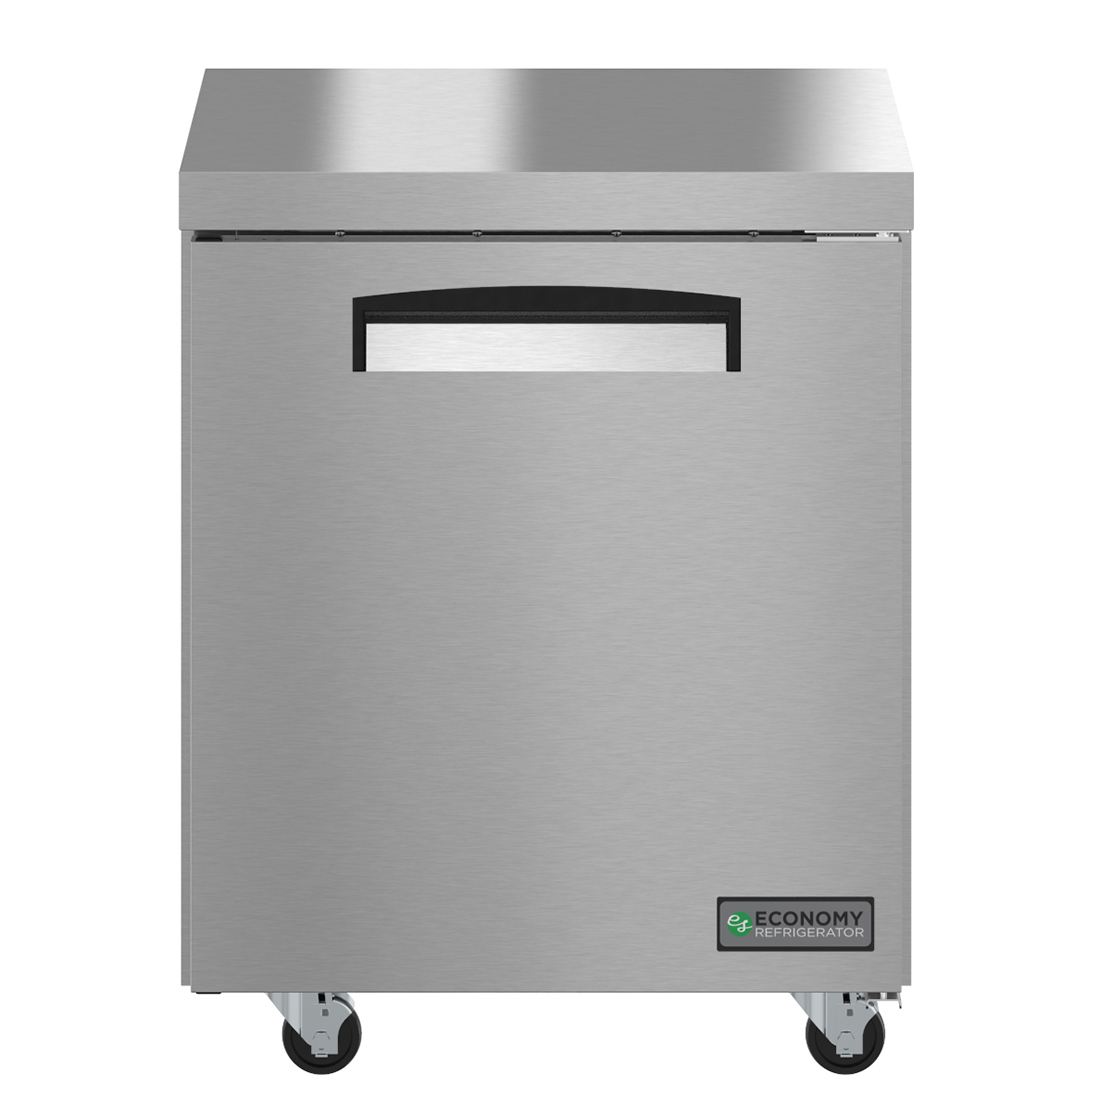 Hoshizaki EUR27A Stainless Undercounter Refrigerator, 27